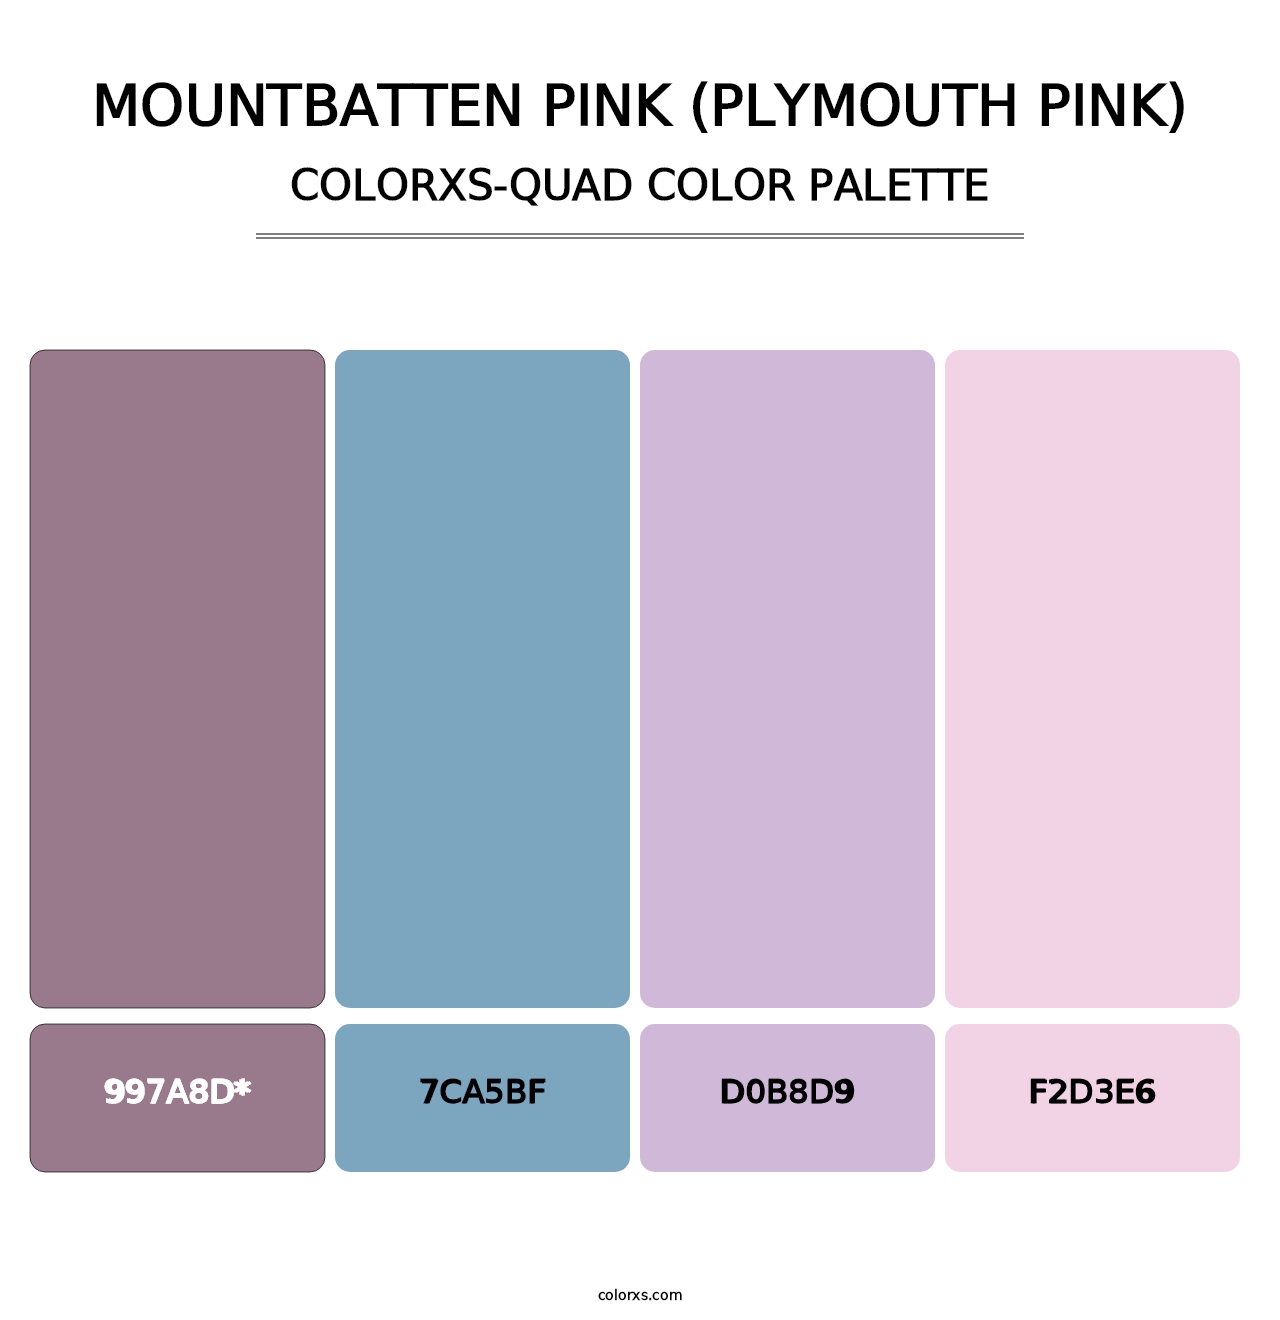 Mountbatten Pink (Plymouth Pink) - Colorxs Quad Palette